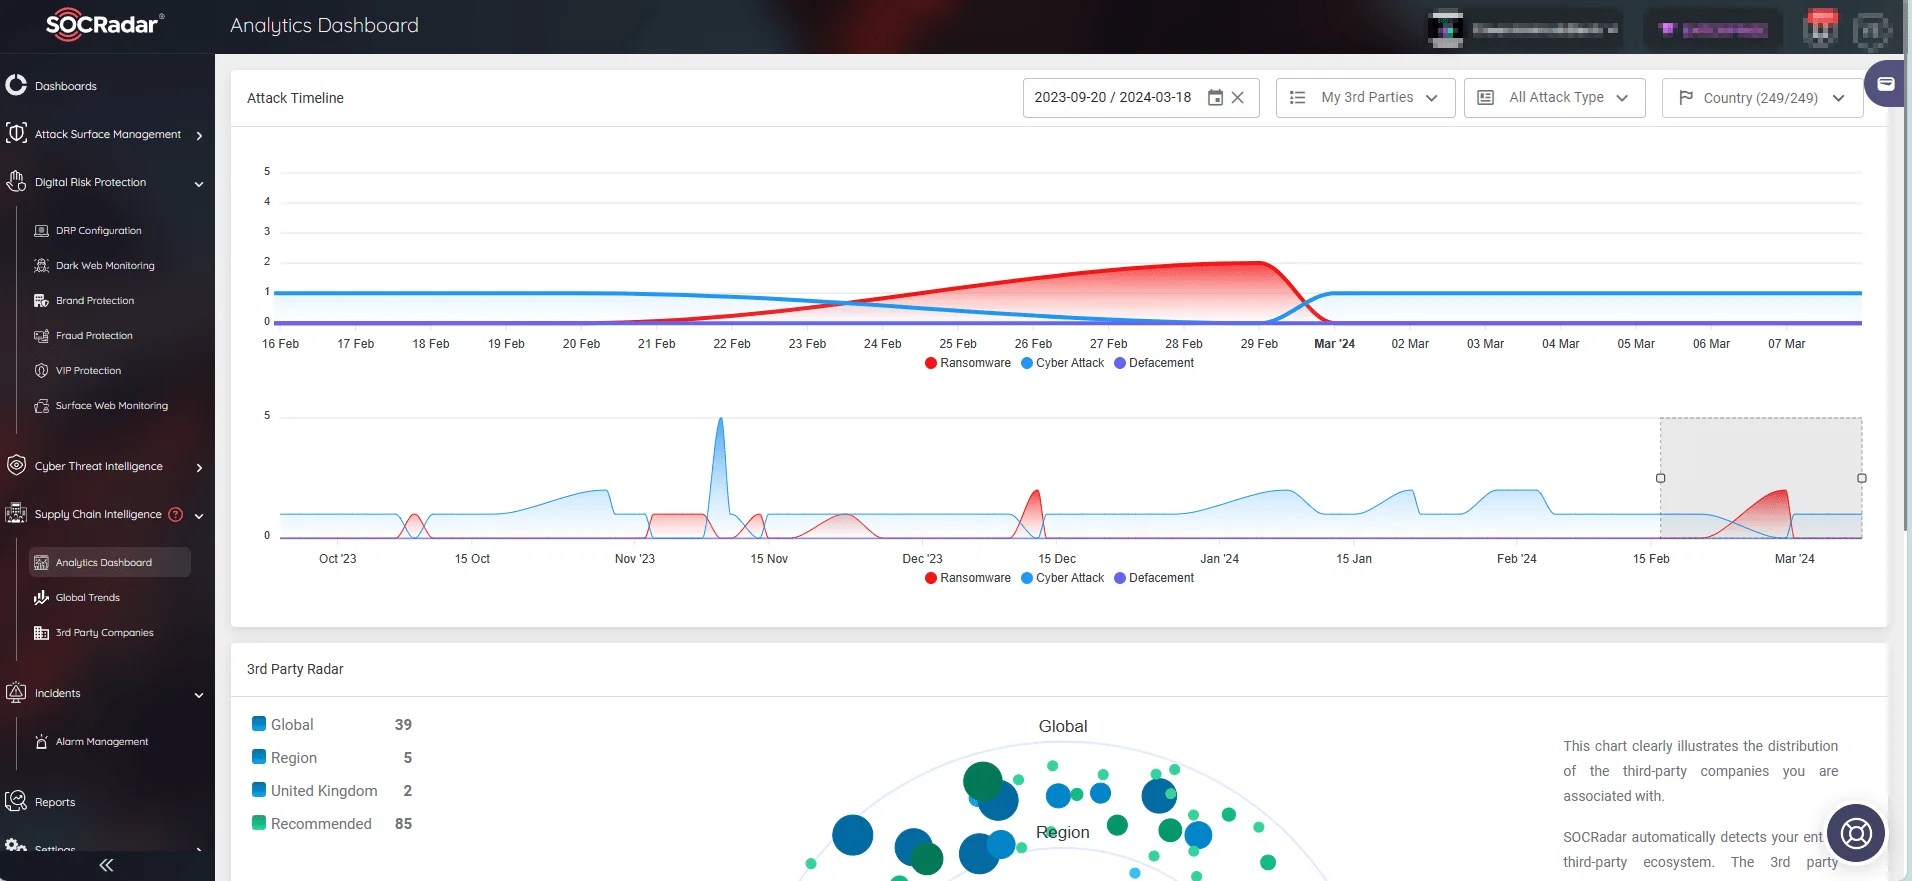 Analytics Dashboard on SOCRadar’s Supply Chain Intelligence